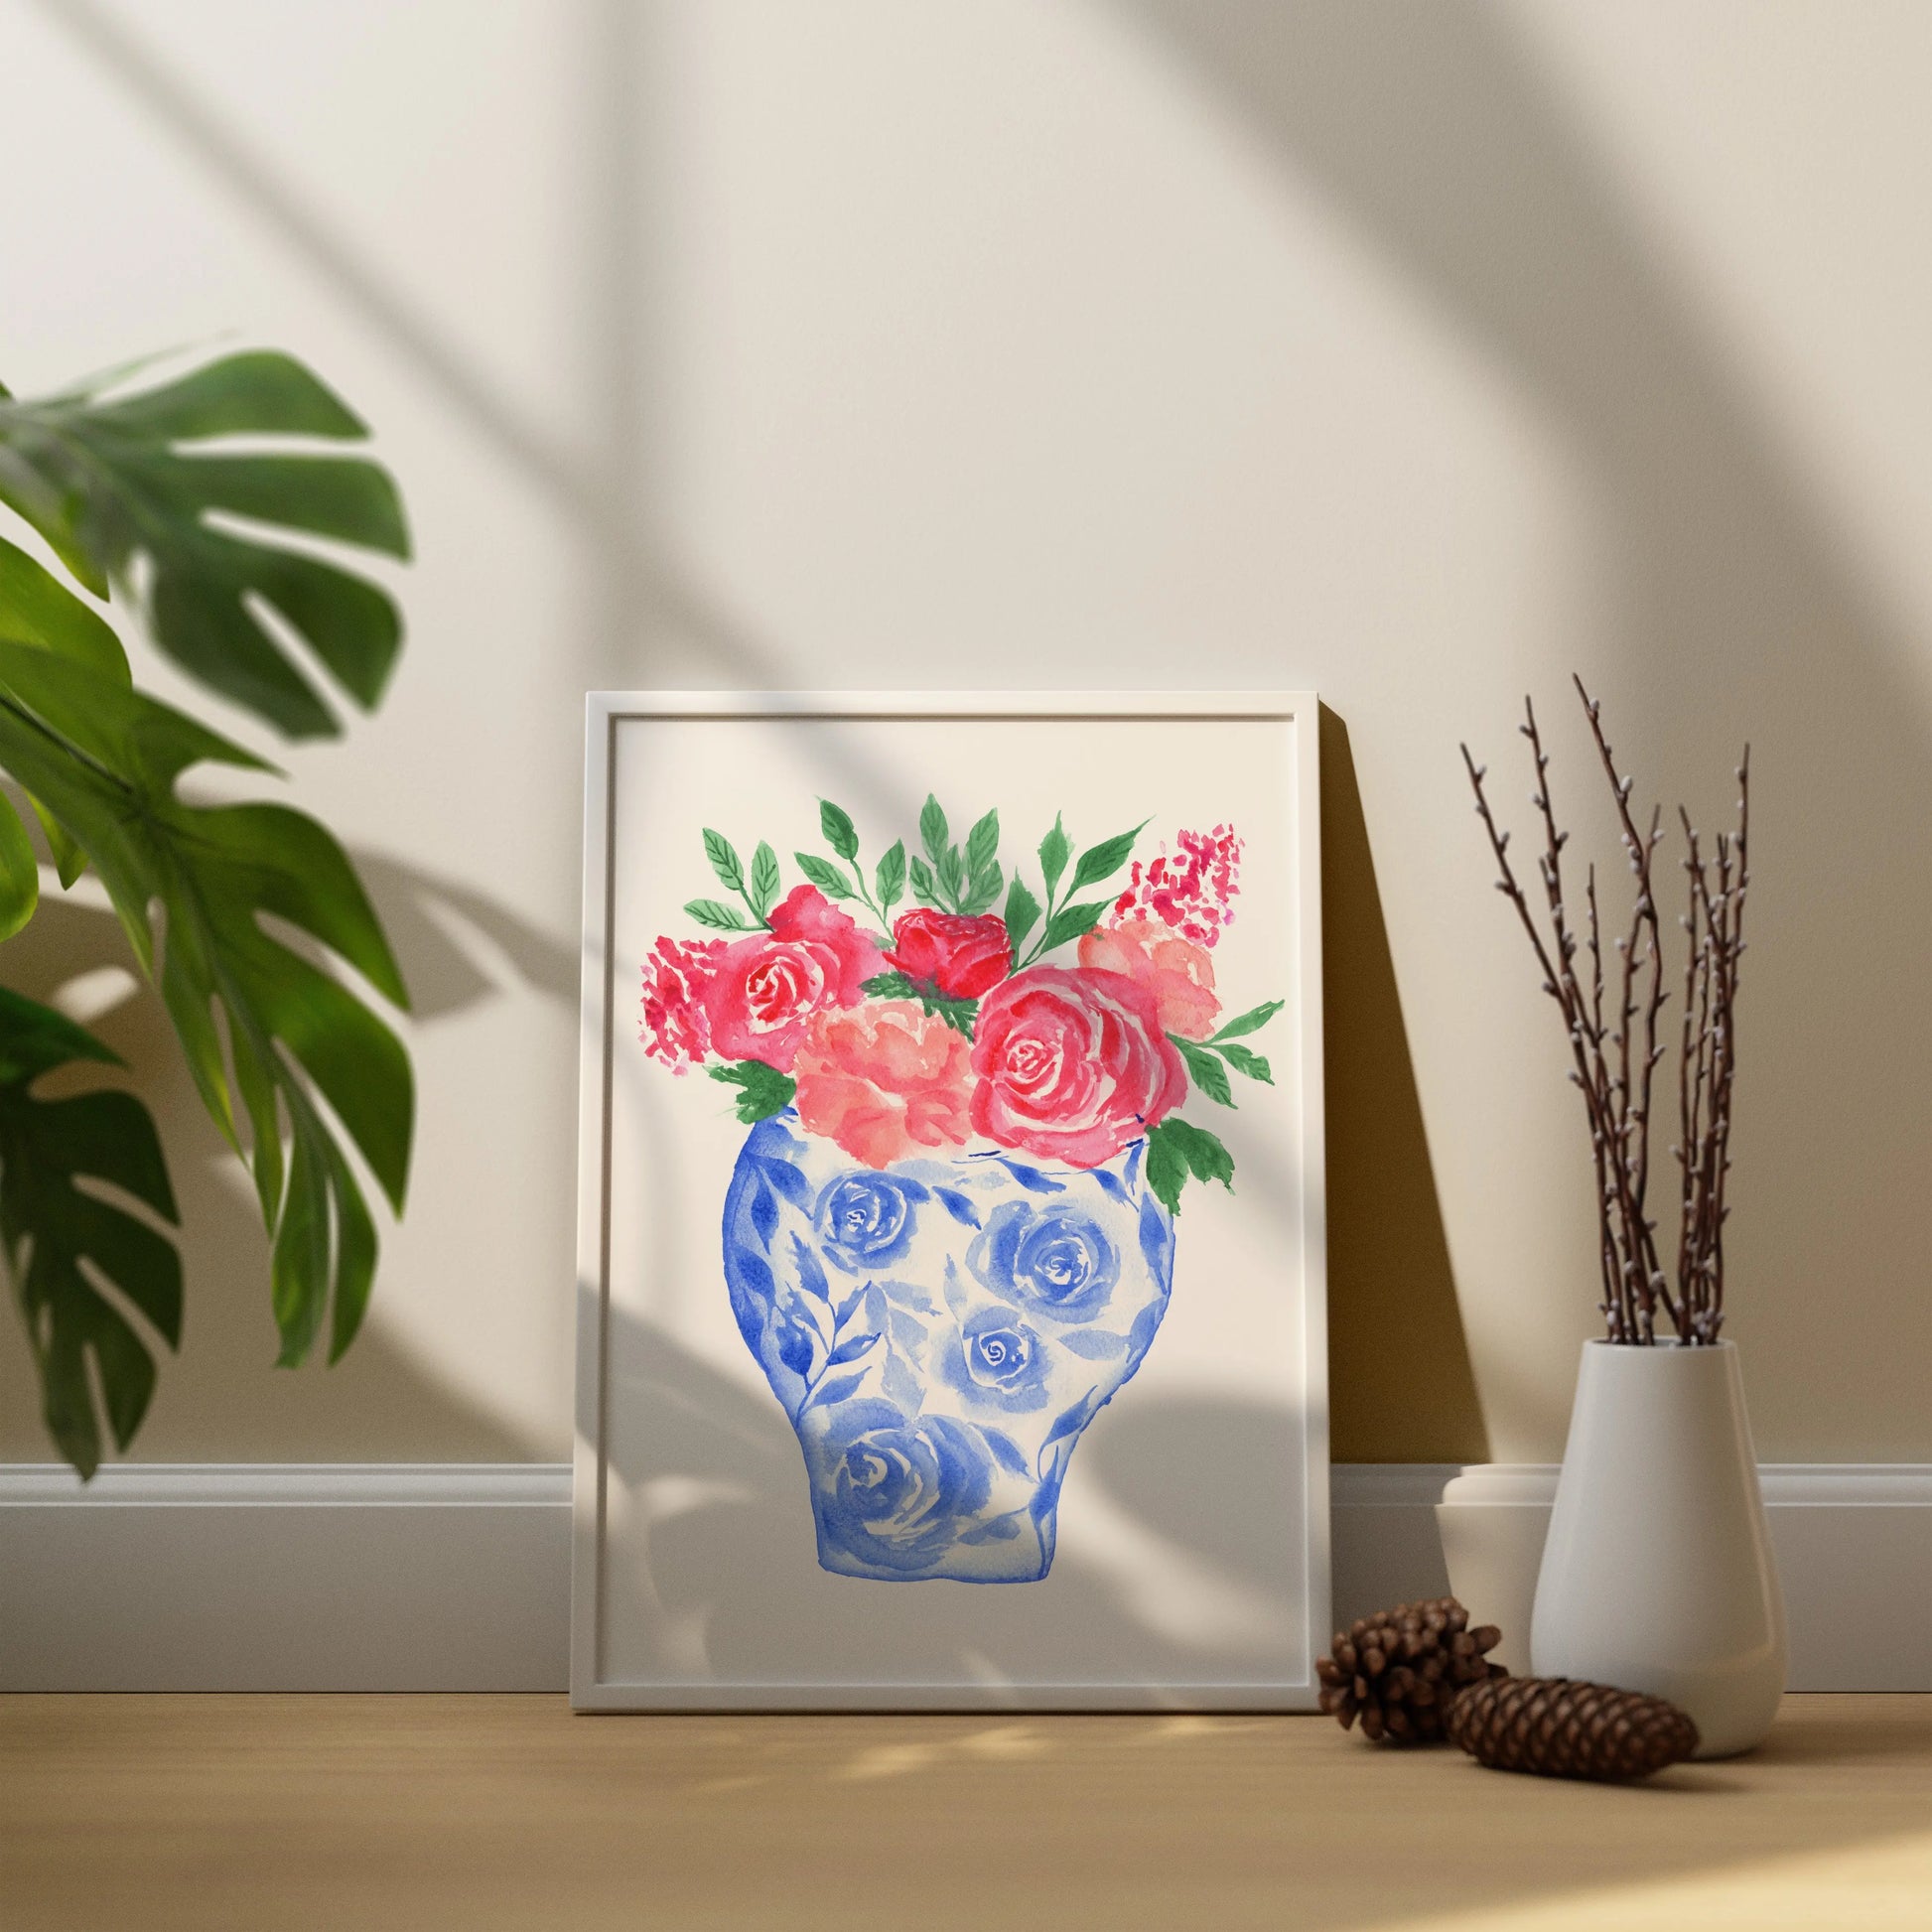 Ginger Jars Art Prints, Watercolor Flowers, Floral Art, Bedroom – The  Wedding Crest Lab